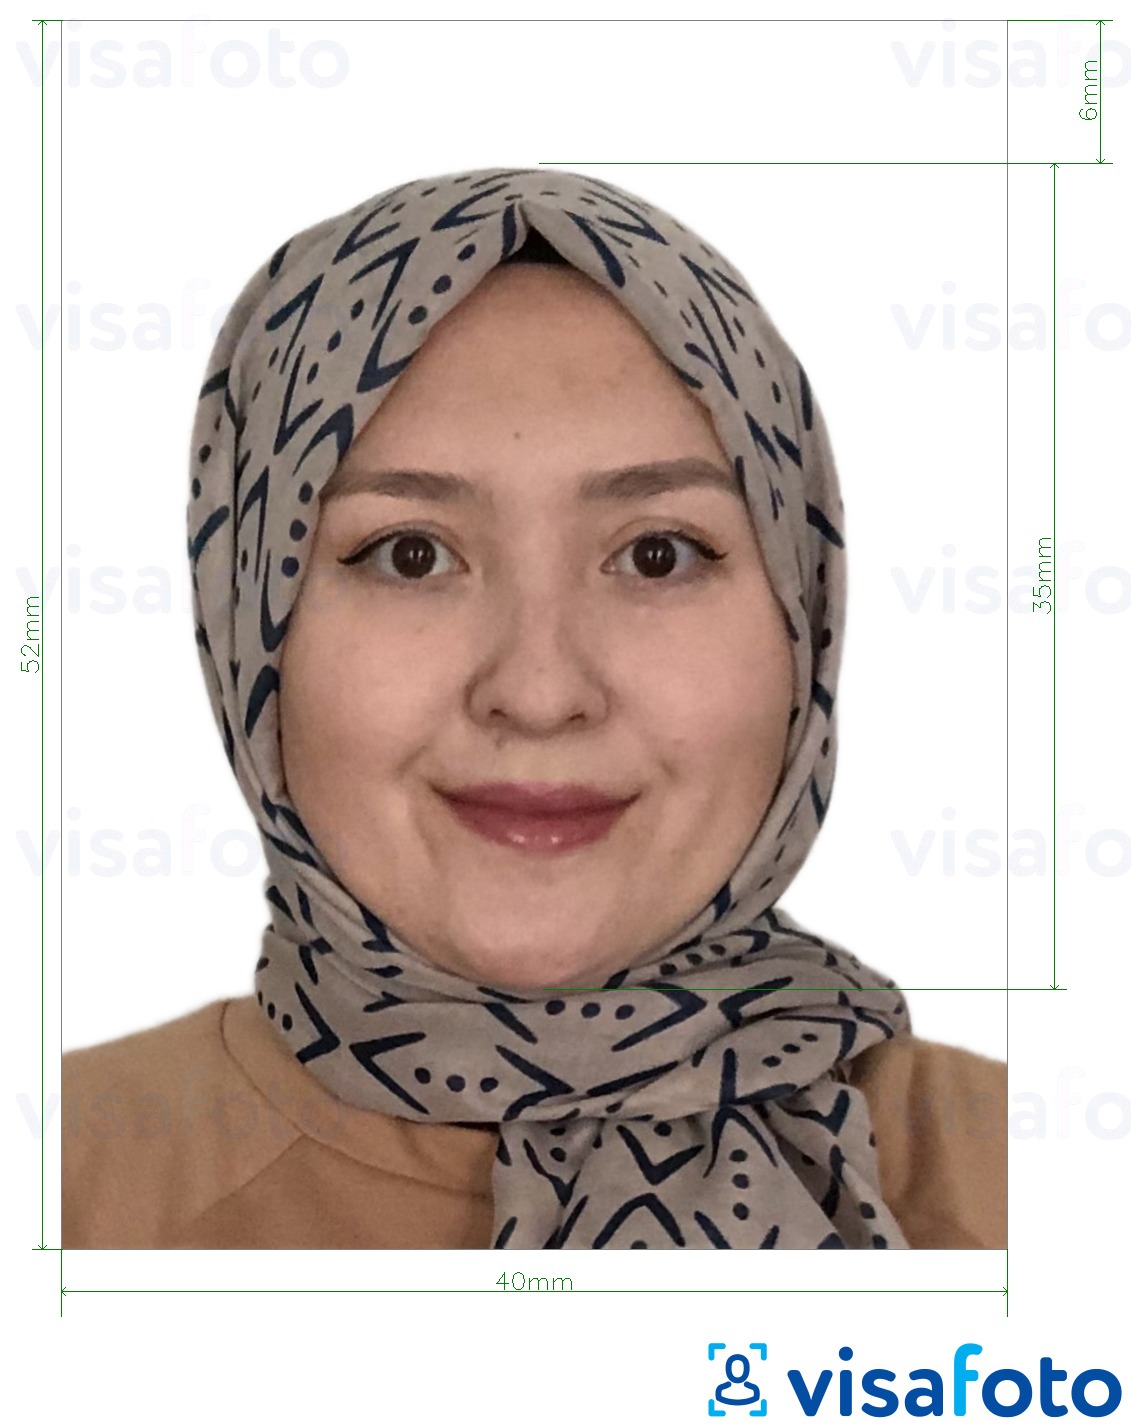 Contoh foto untuk Pasport Brunei 5.2x4 cm (52x40 mm) dengan spesifikasi saiz yang tepat.